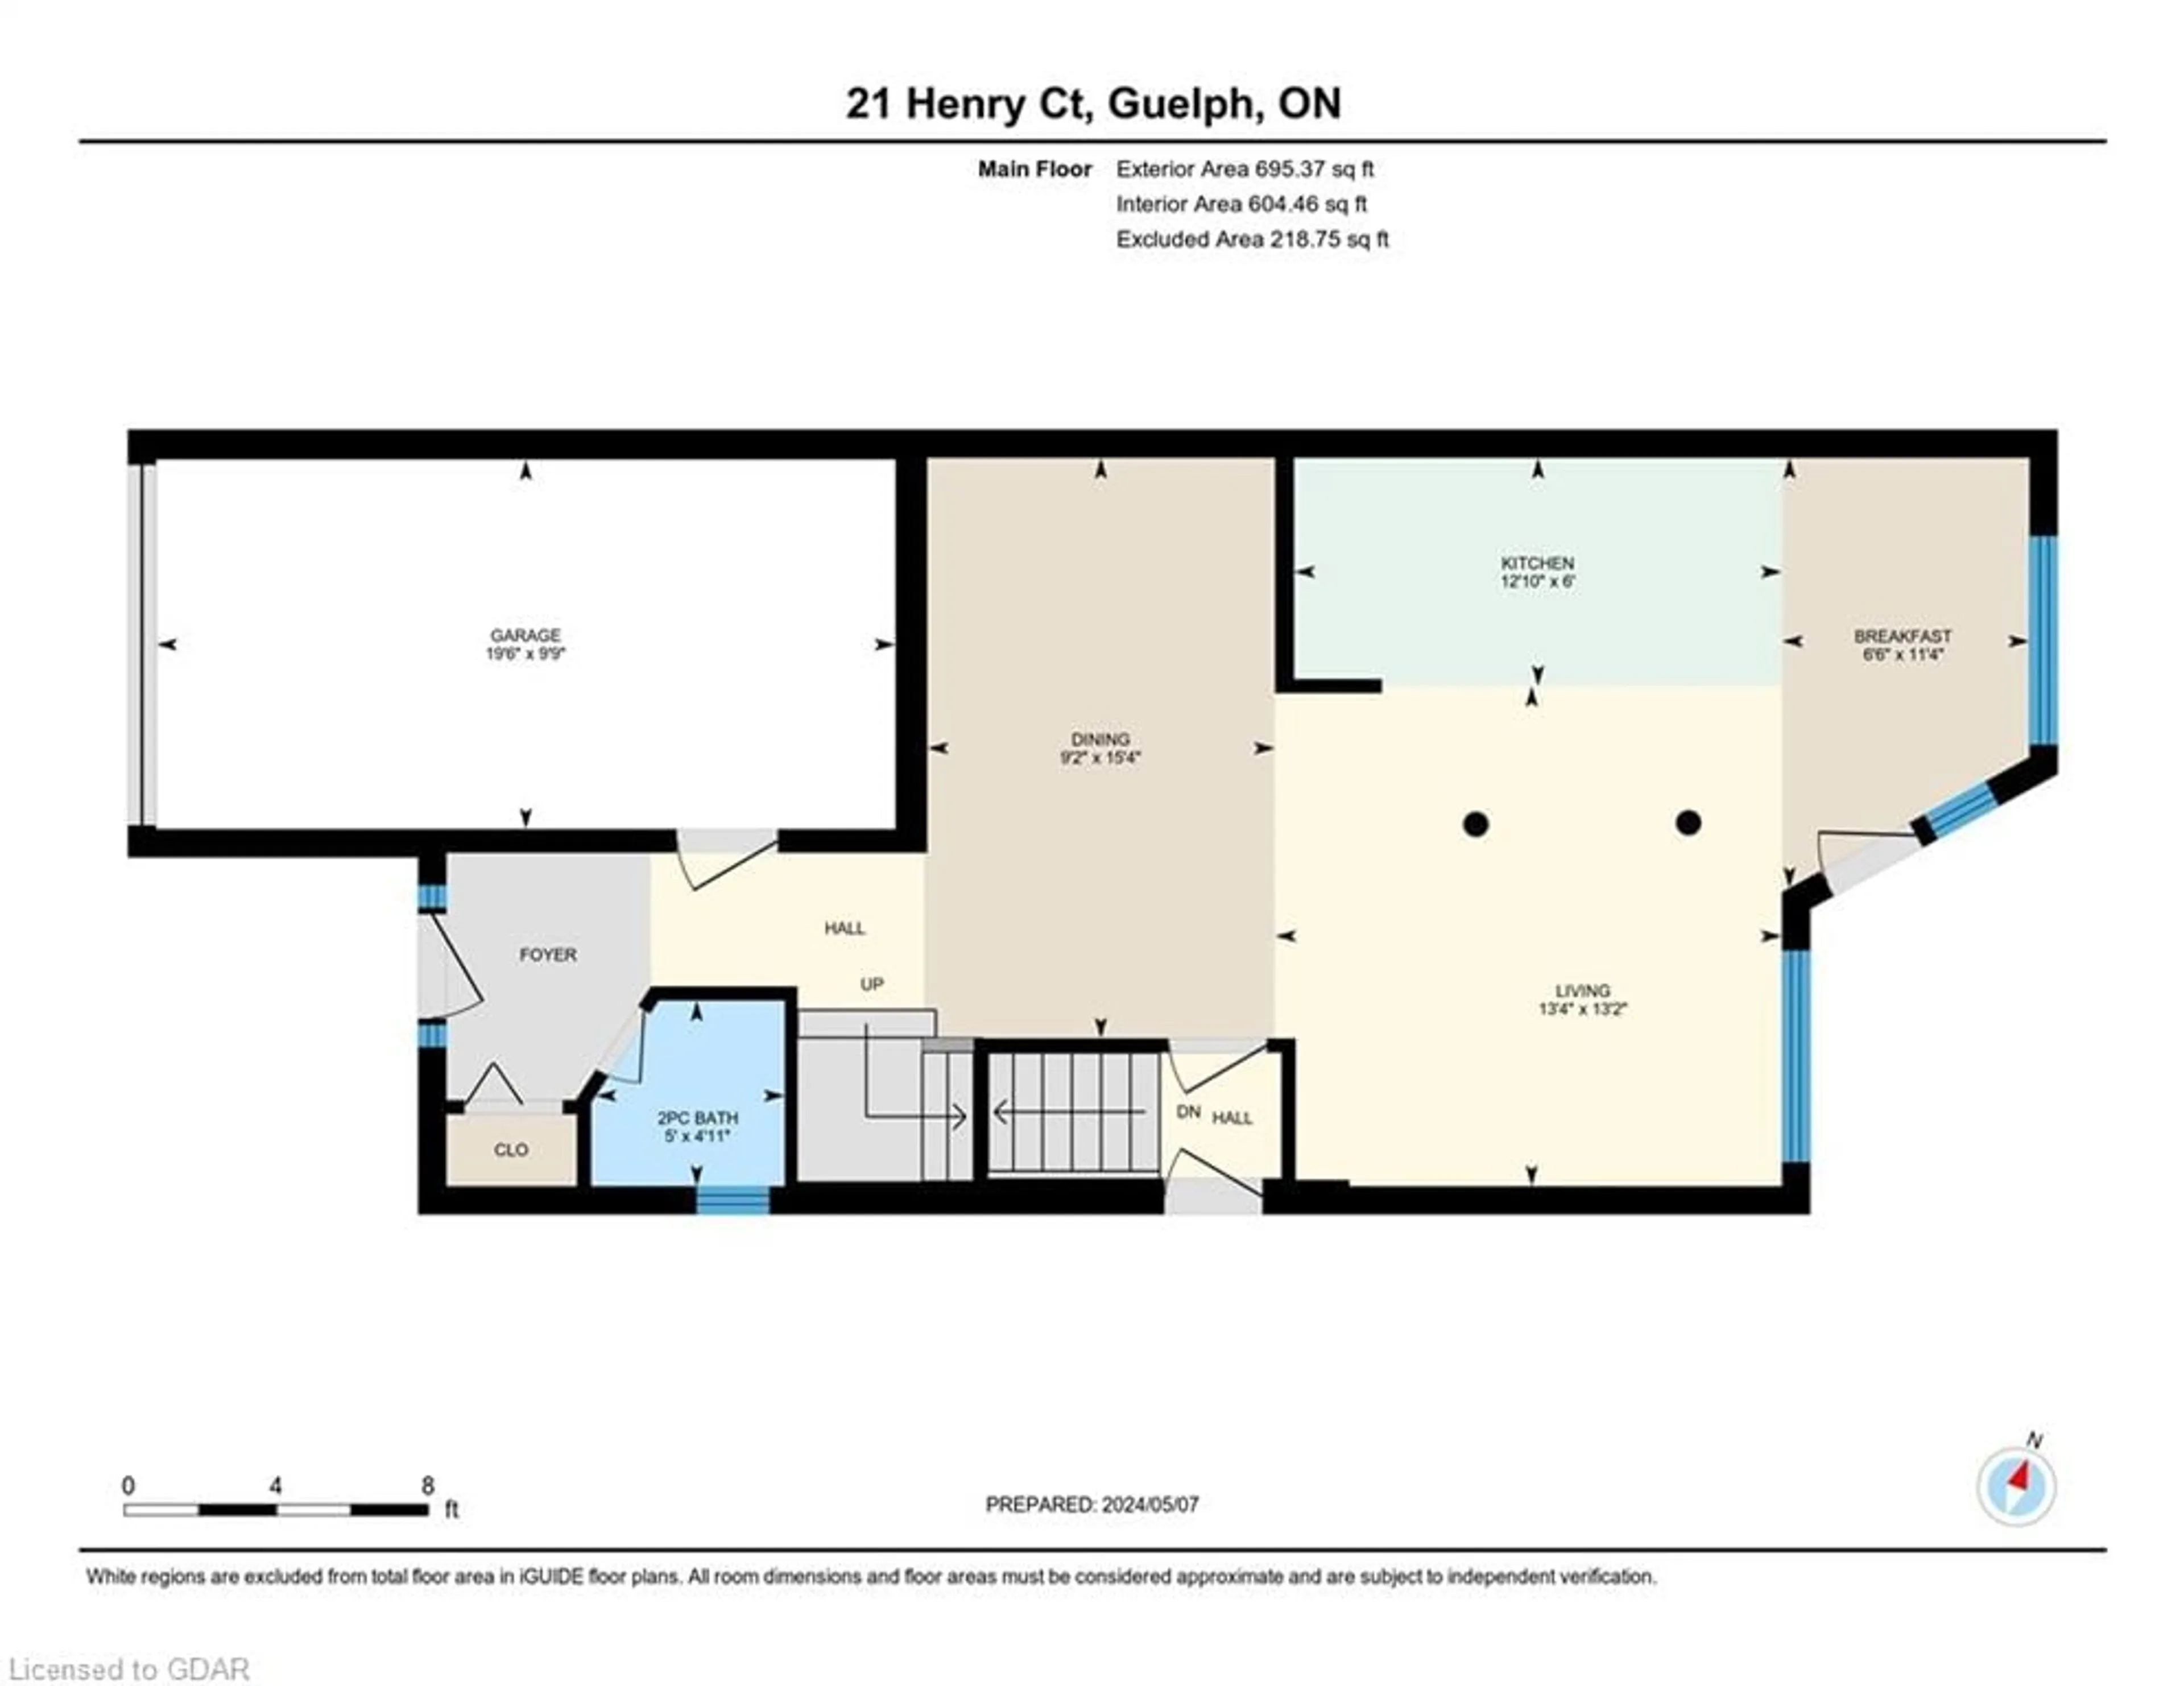 Floor plan for 21 Henry Crt, Guelph Ontario N1E 0A3